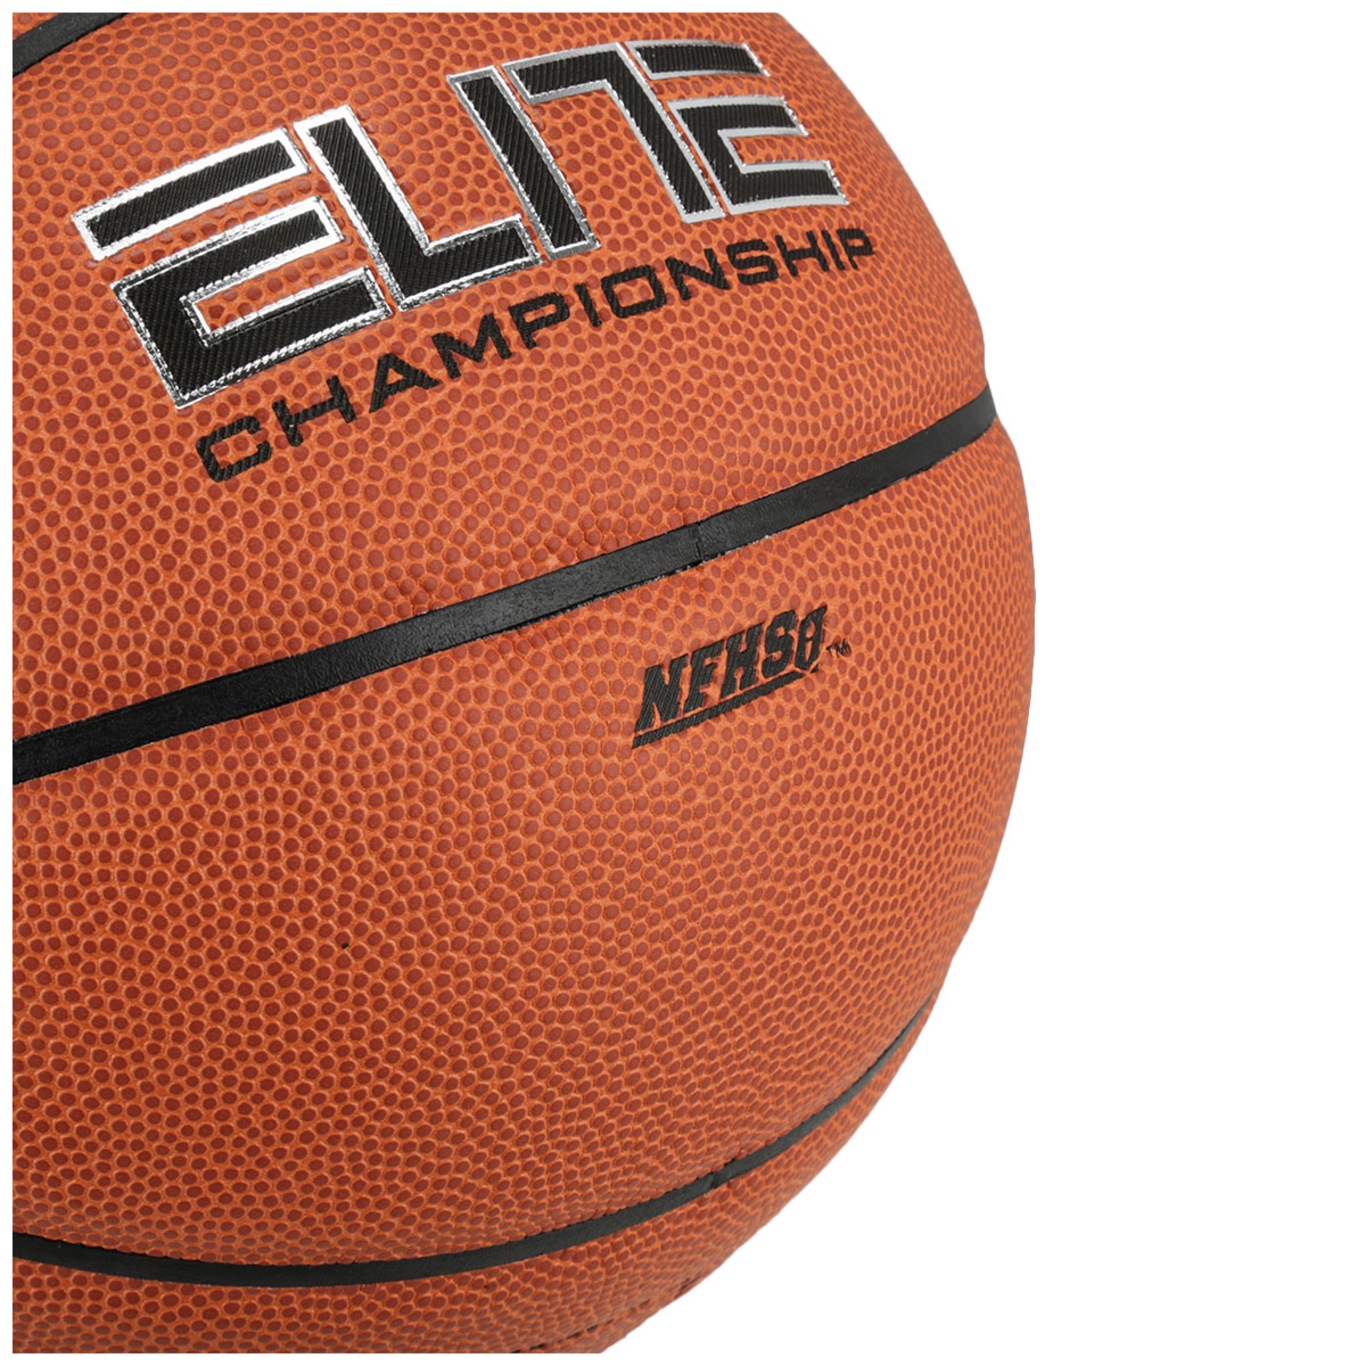 Bola de Basquete Nike Elite Championship 8P 7